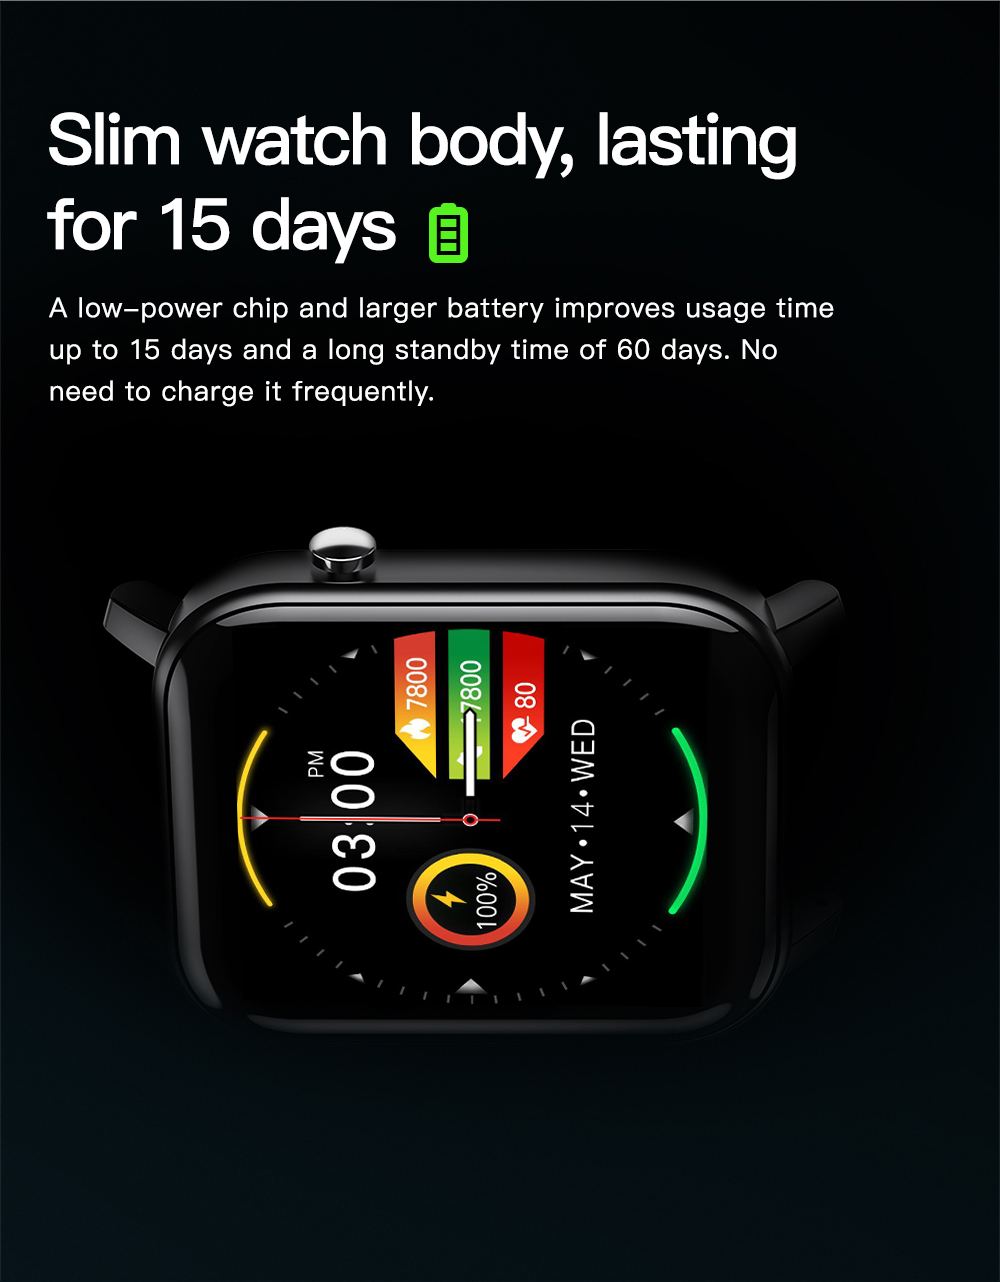 Kospet GTO Smart Watch Slim watch body, lasting for 15 days